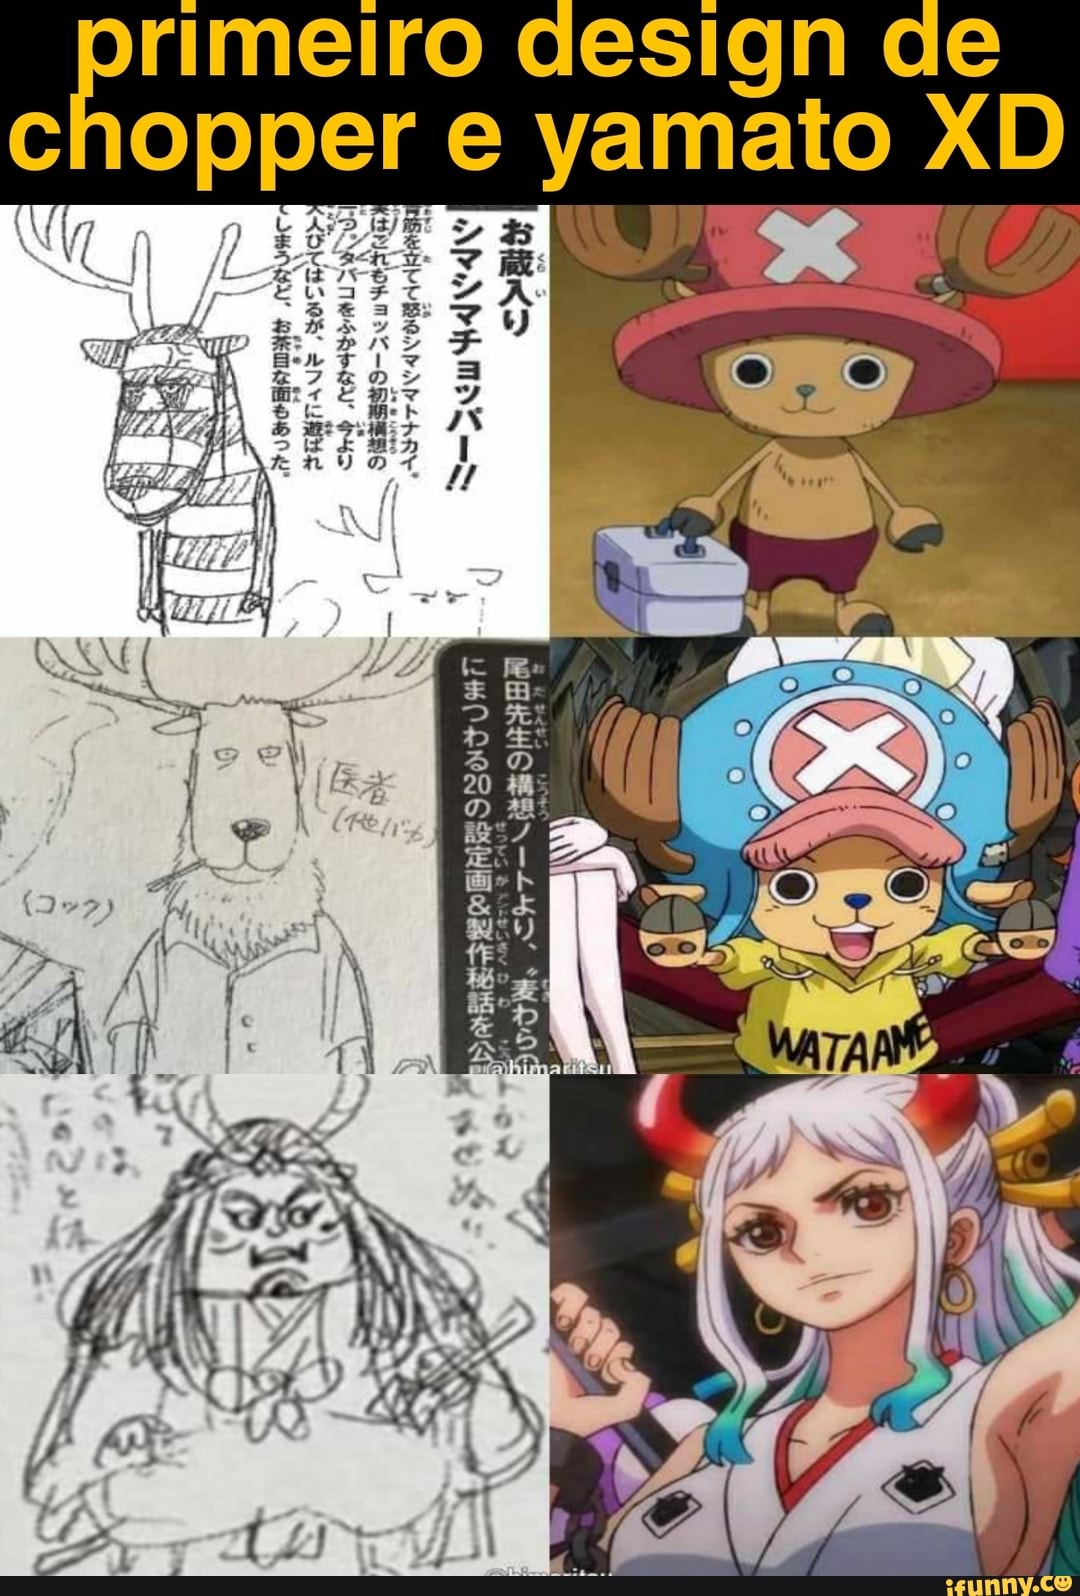 Chopper Monster Point  One piece anime, Anime, Personagens de anime